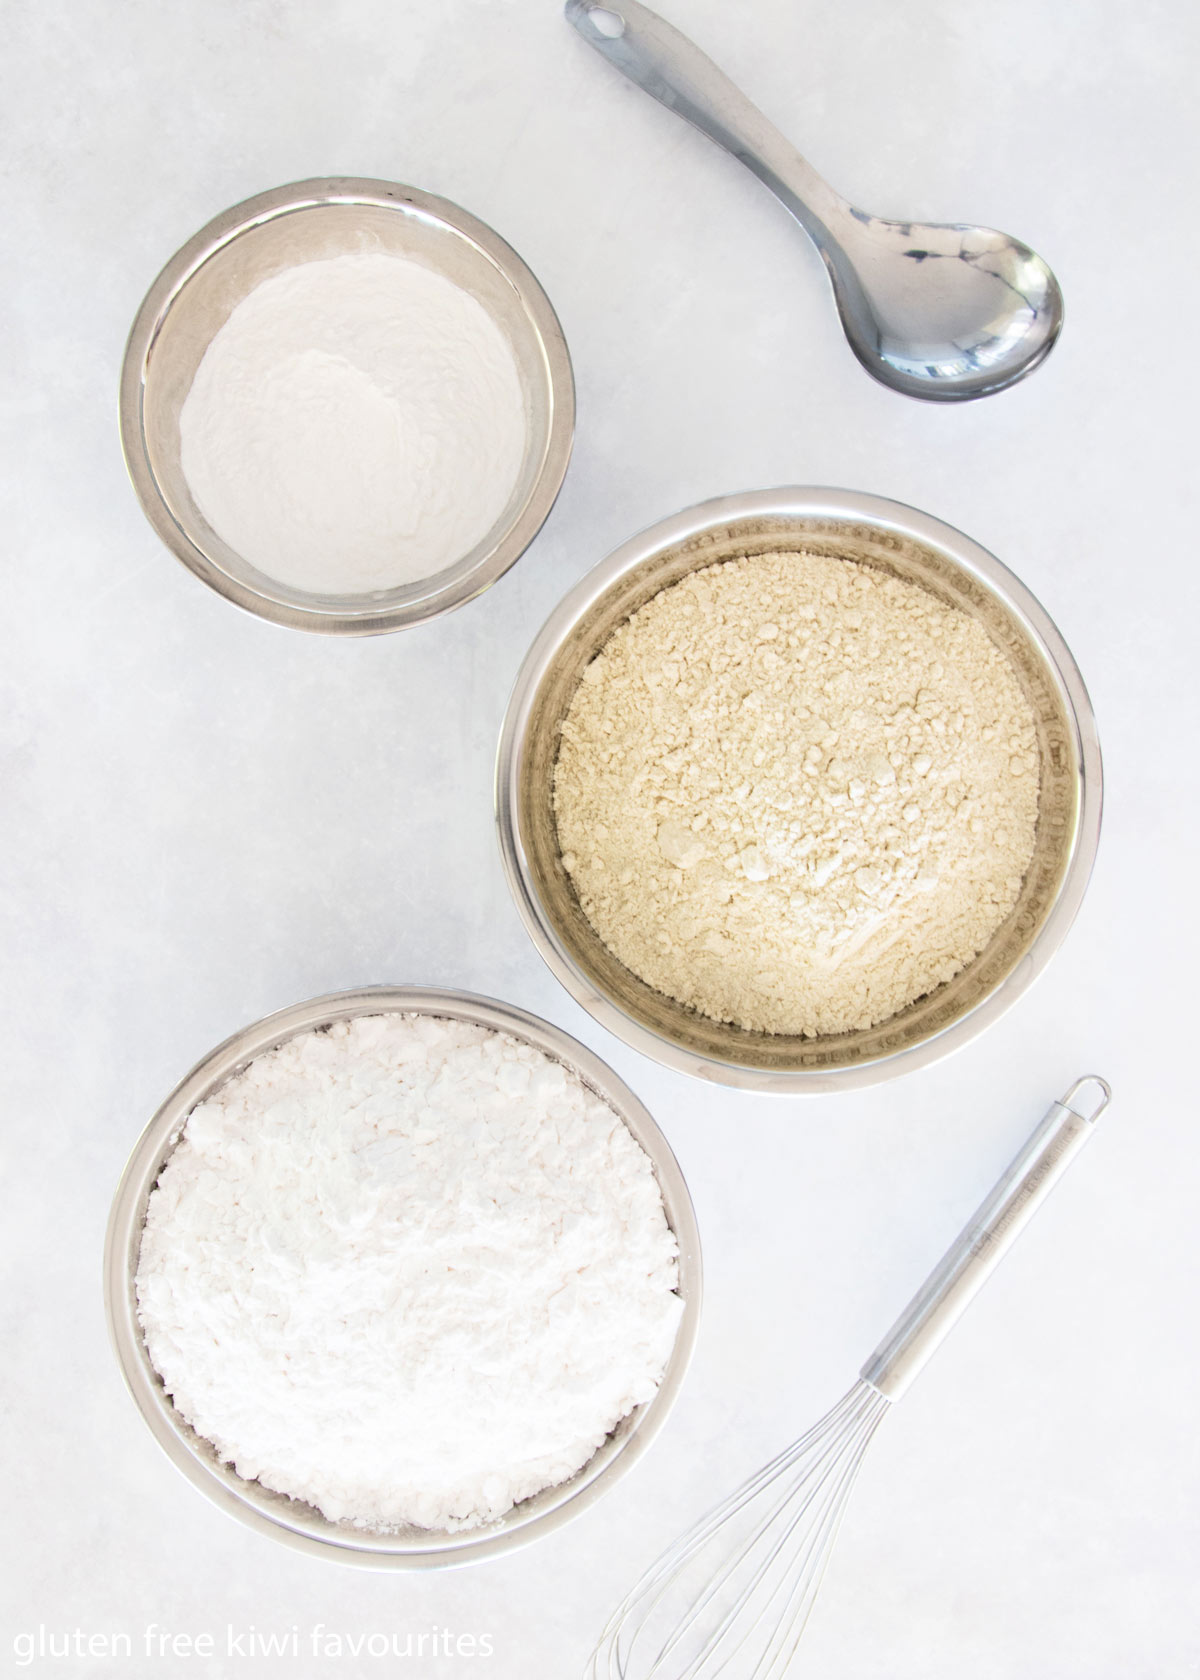 Gluten free flours in metal bowls - brown rice flour, tapioca starch and potato starch.